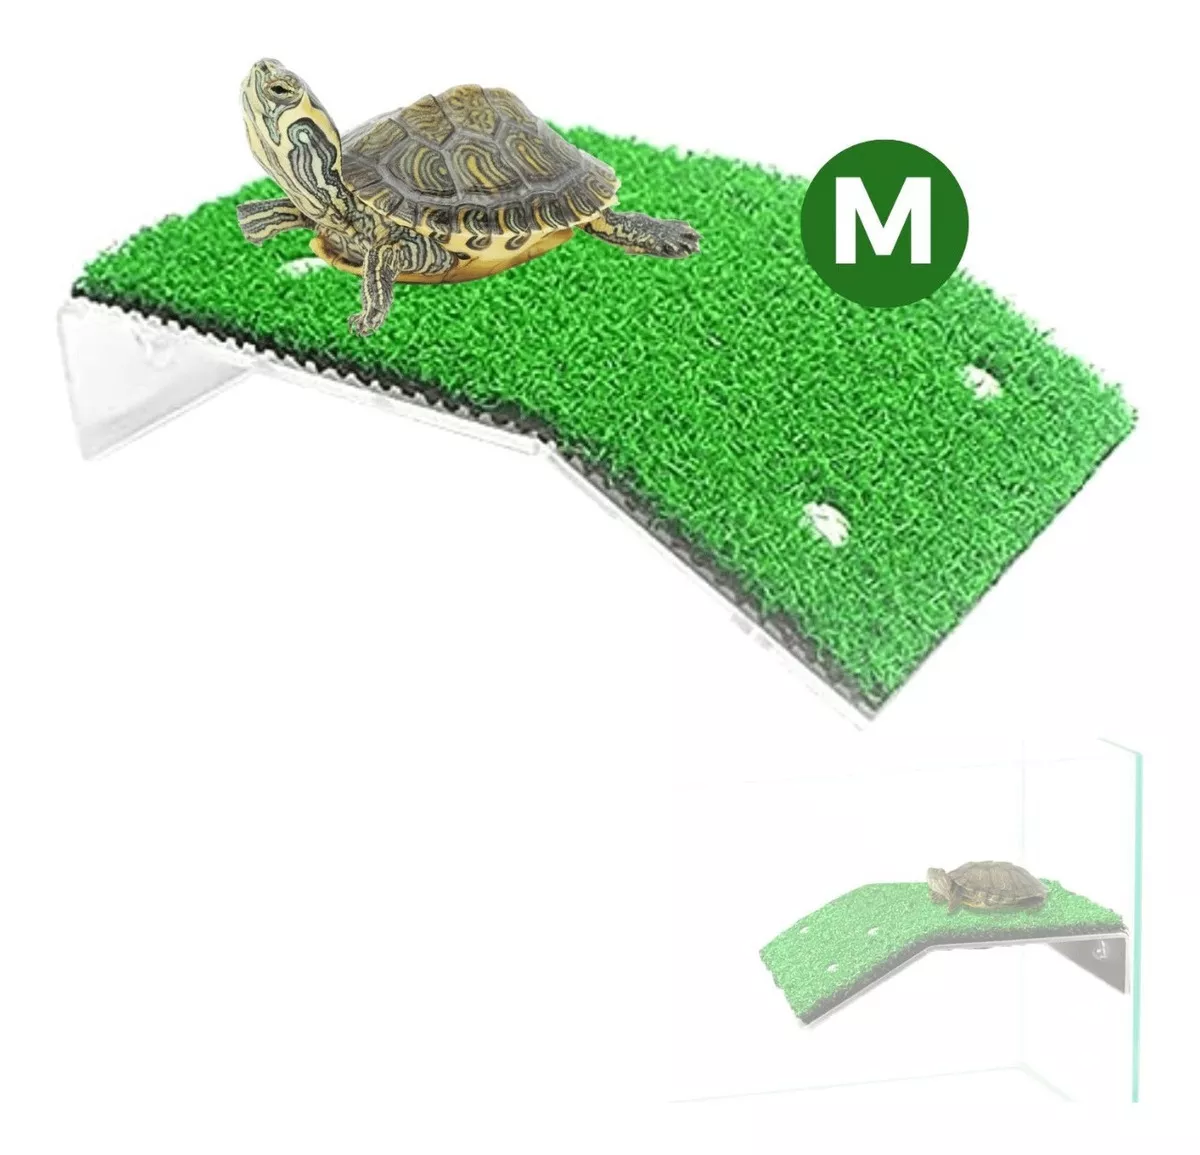 Tercera imagen para búsqueda de terrario tortuga